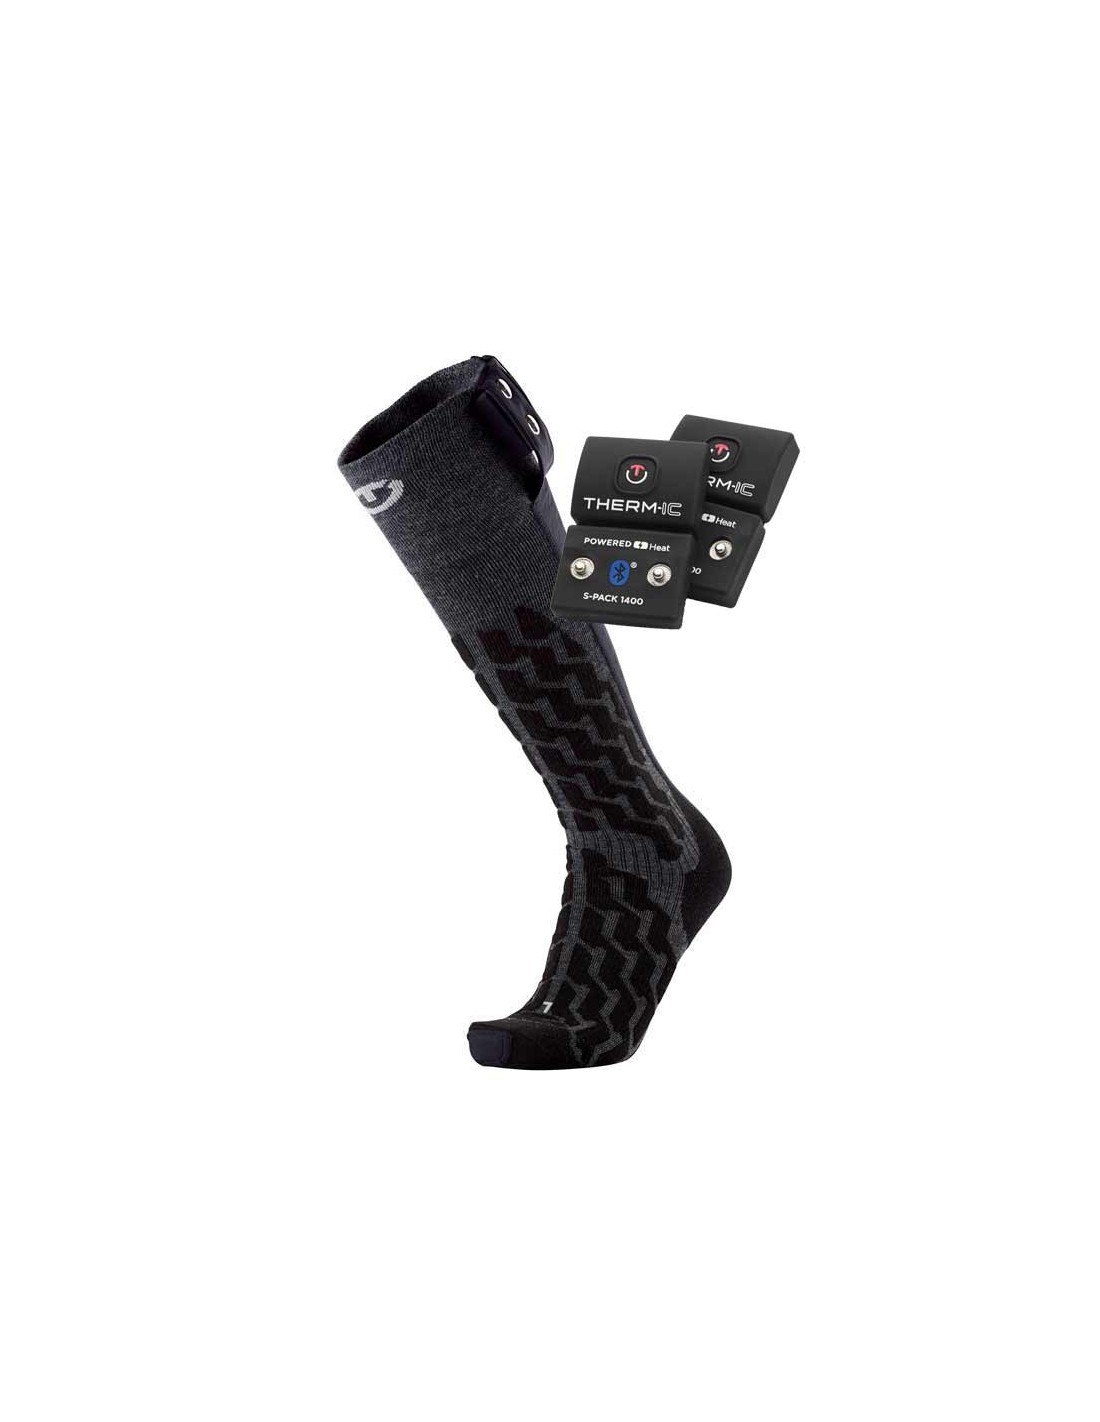 Therm-IC Heat Fusion Uni + S-Pack 1400 mit Bluetooth Sockengröße - 42 - 44, von Therm-Ic